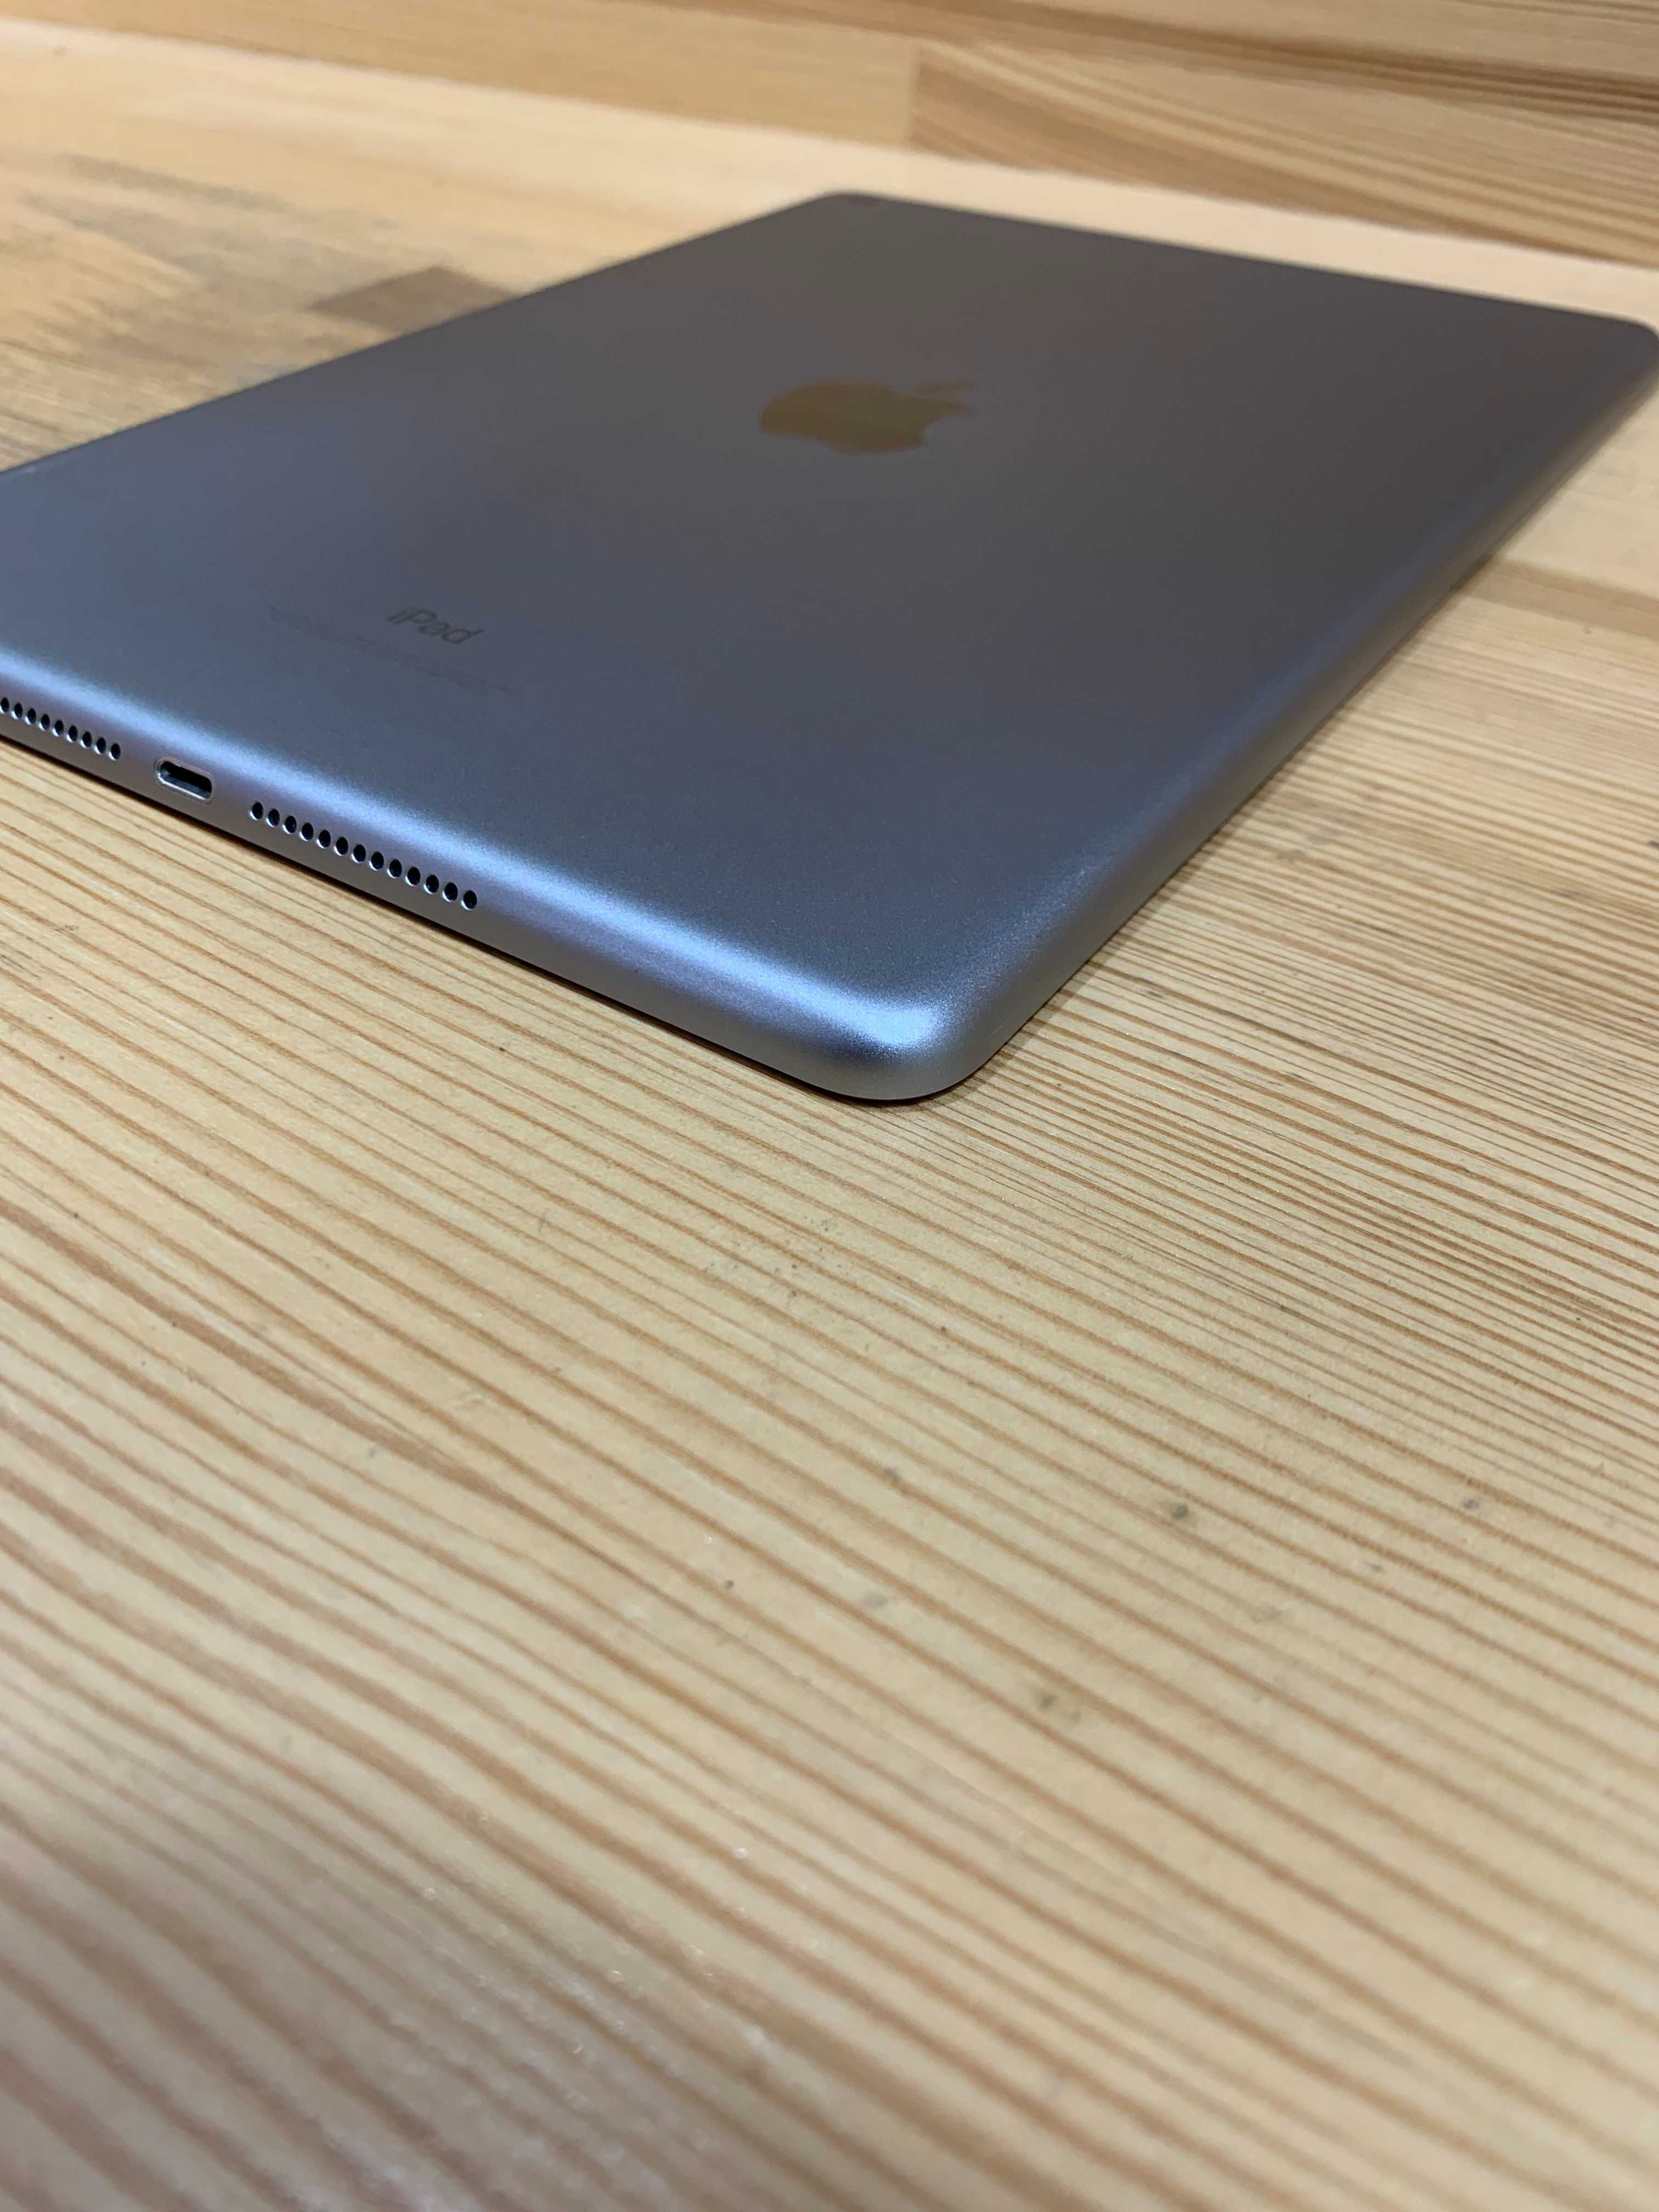 iPad (6Gen 2018) 32Gb Wi-Fi Space Gray Магазин / Гарантия